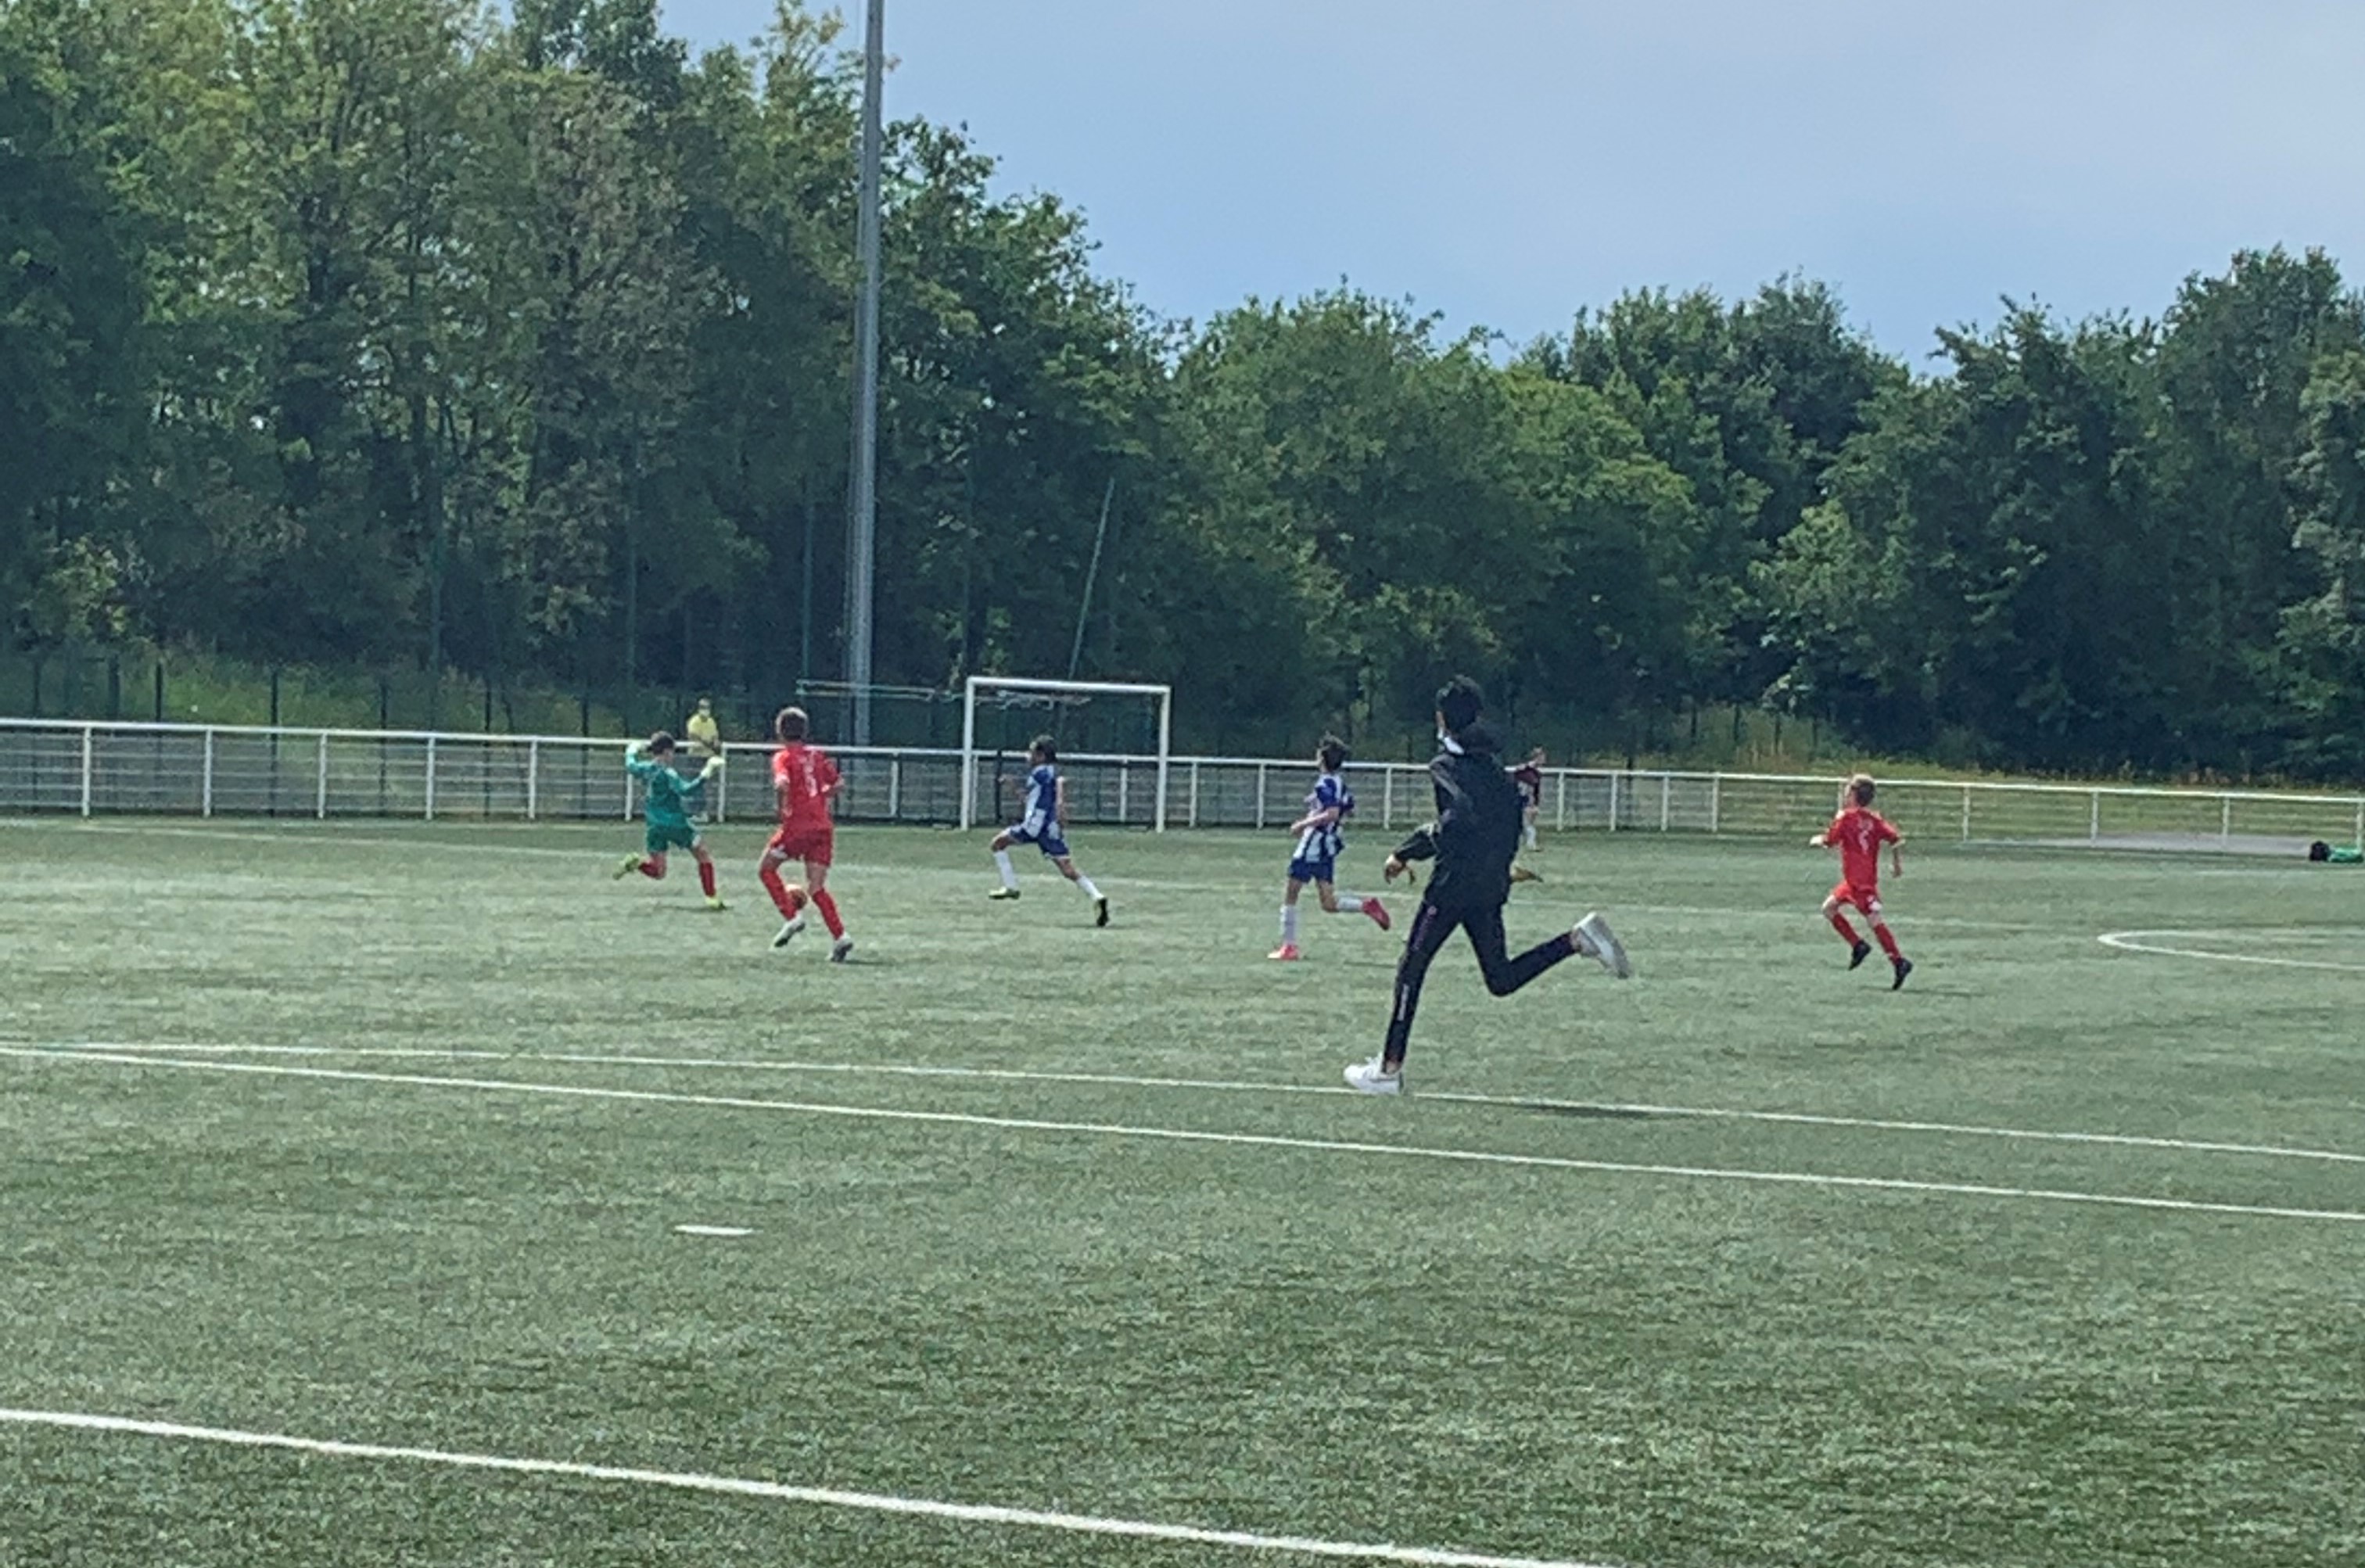 Photos matchs amicaux U12 Treillières-Sautron samedi 29 mai 2021!